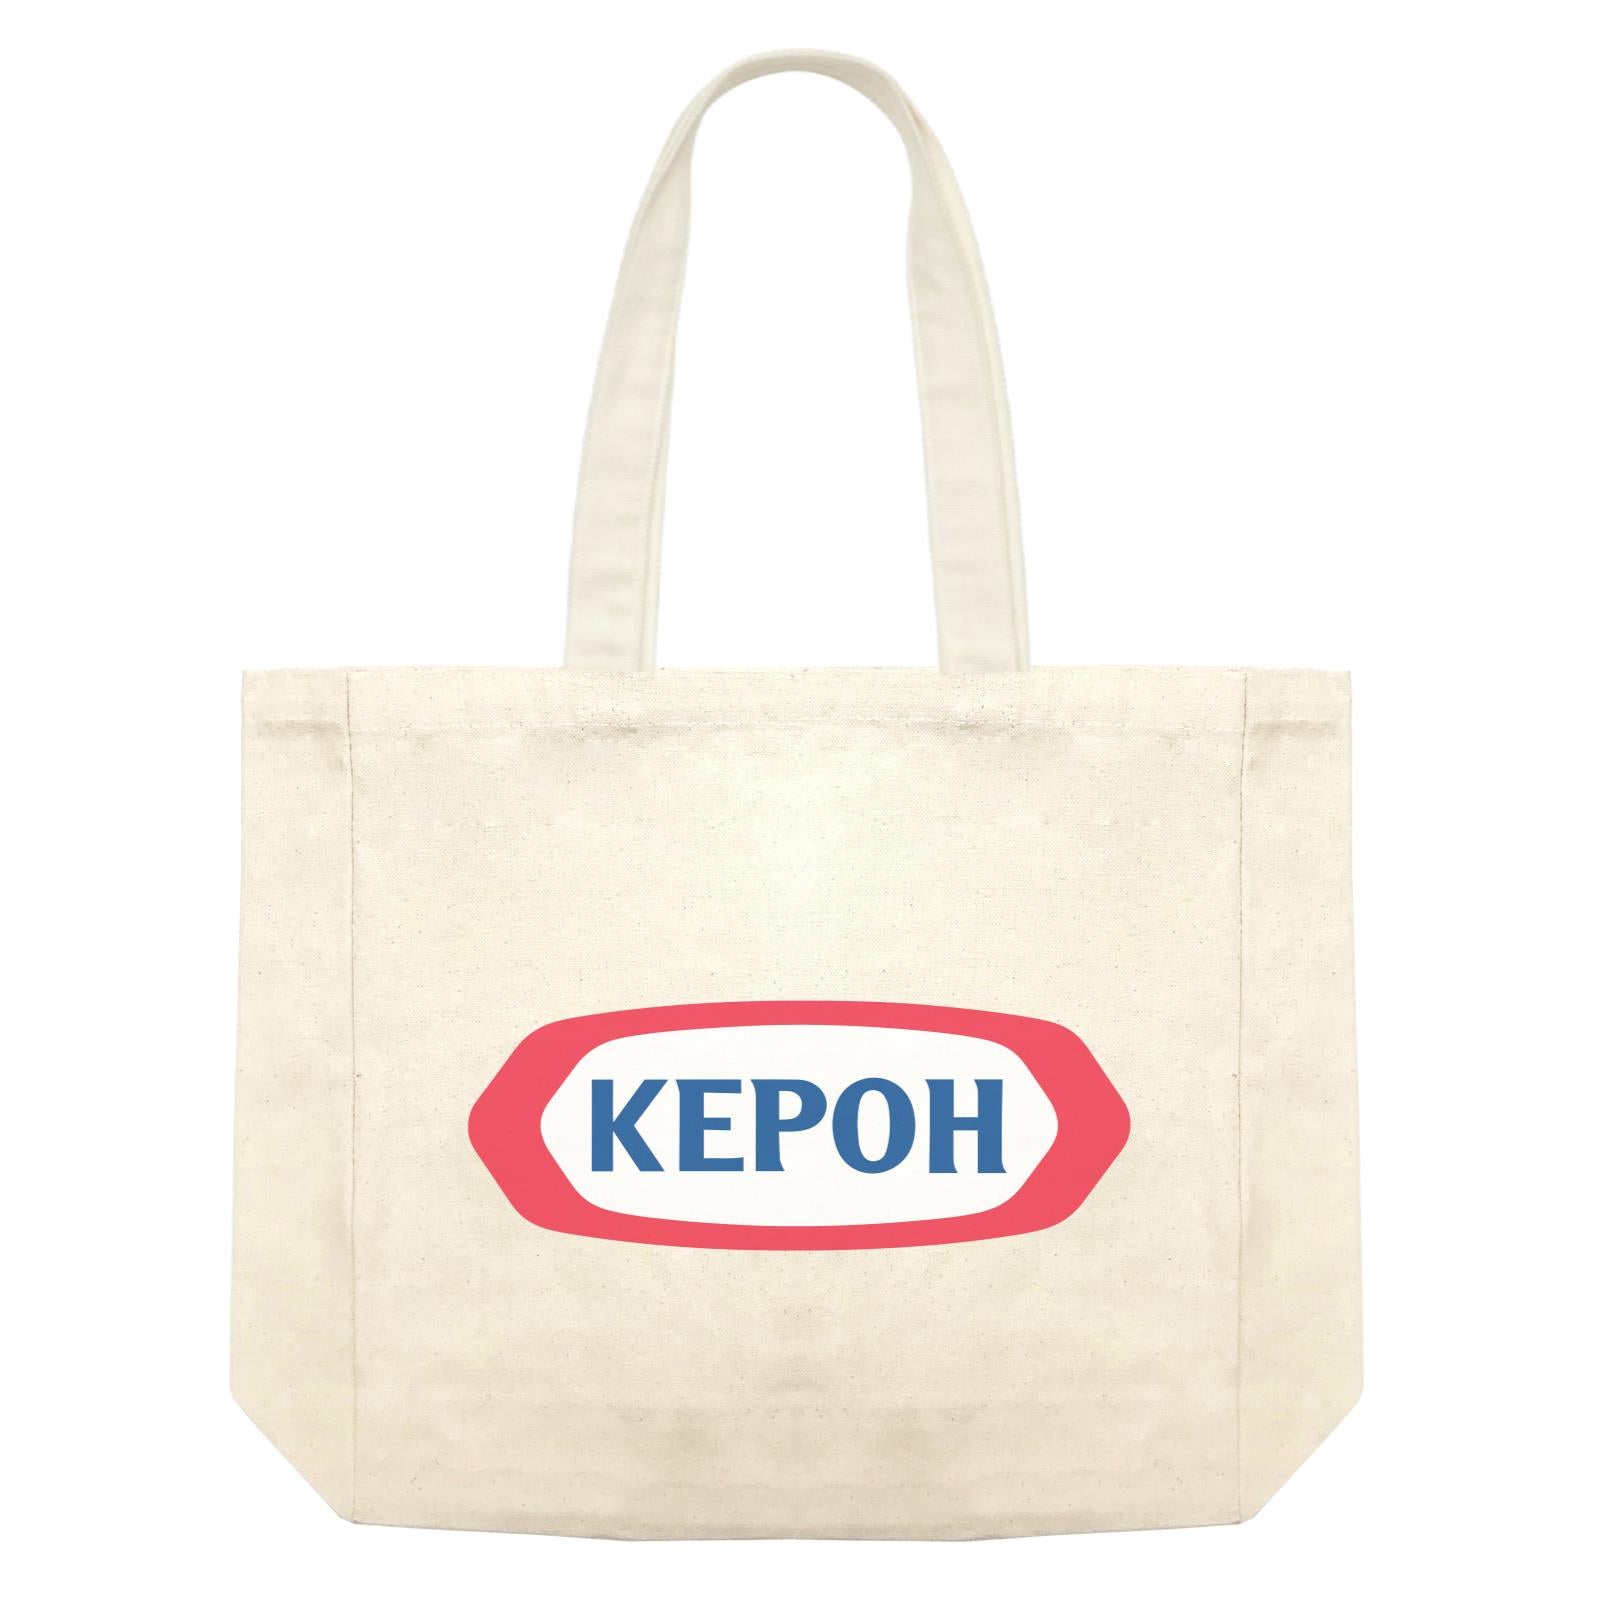 Slang Statement Kepoh Accessories Shopping Bag